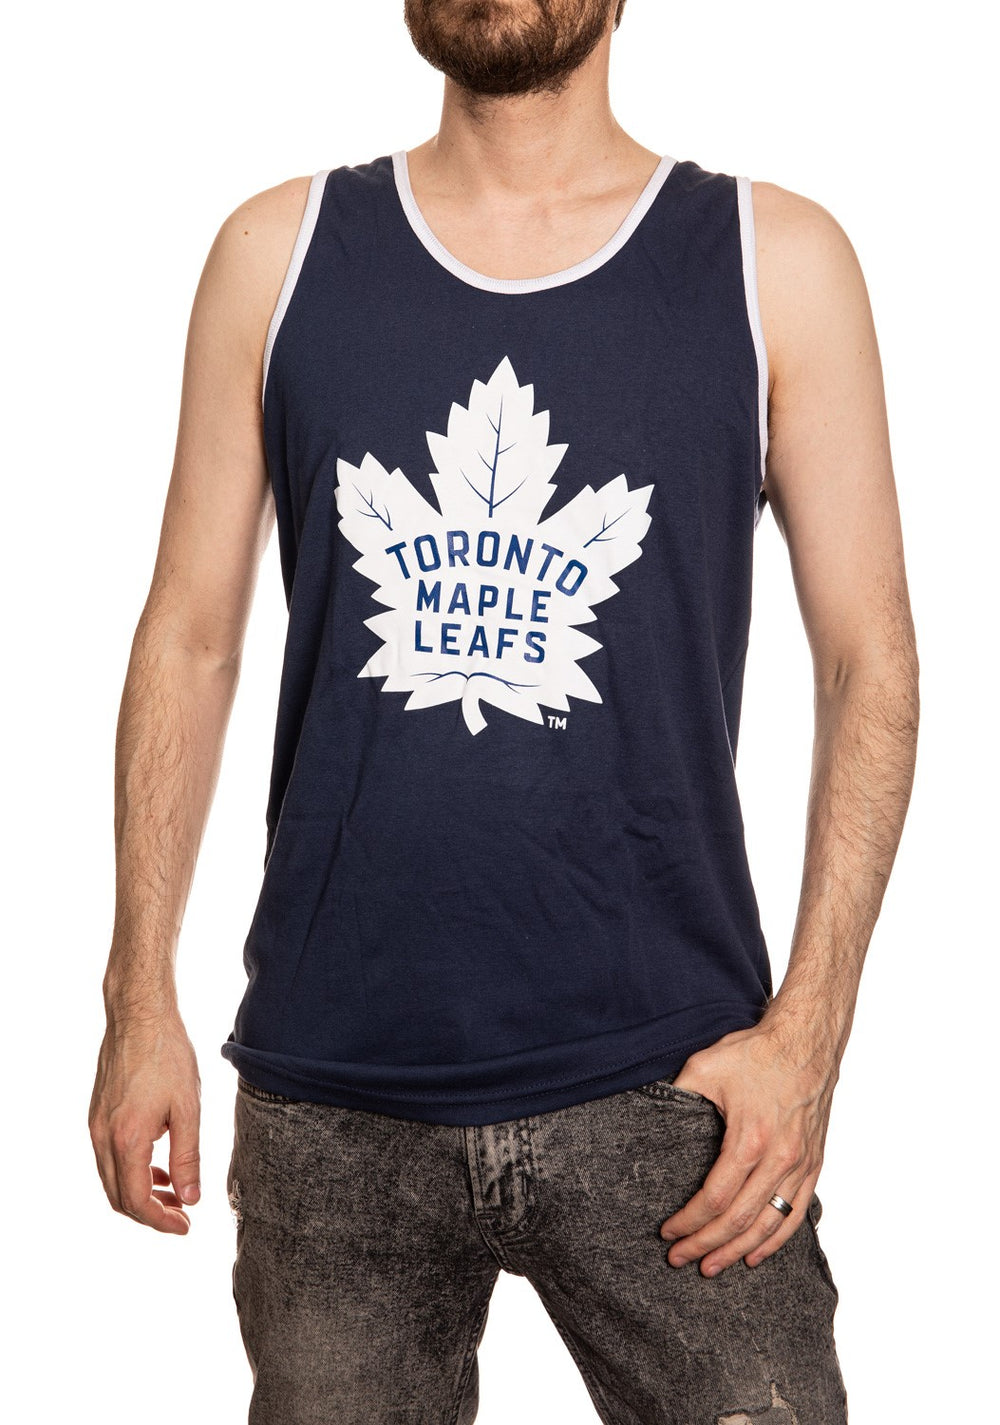 Toronto Maple Leafs Mens Medium Golf Shirt by Level Wear -excellent